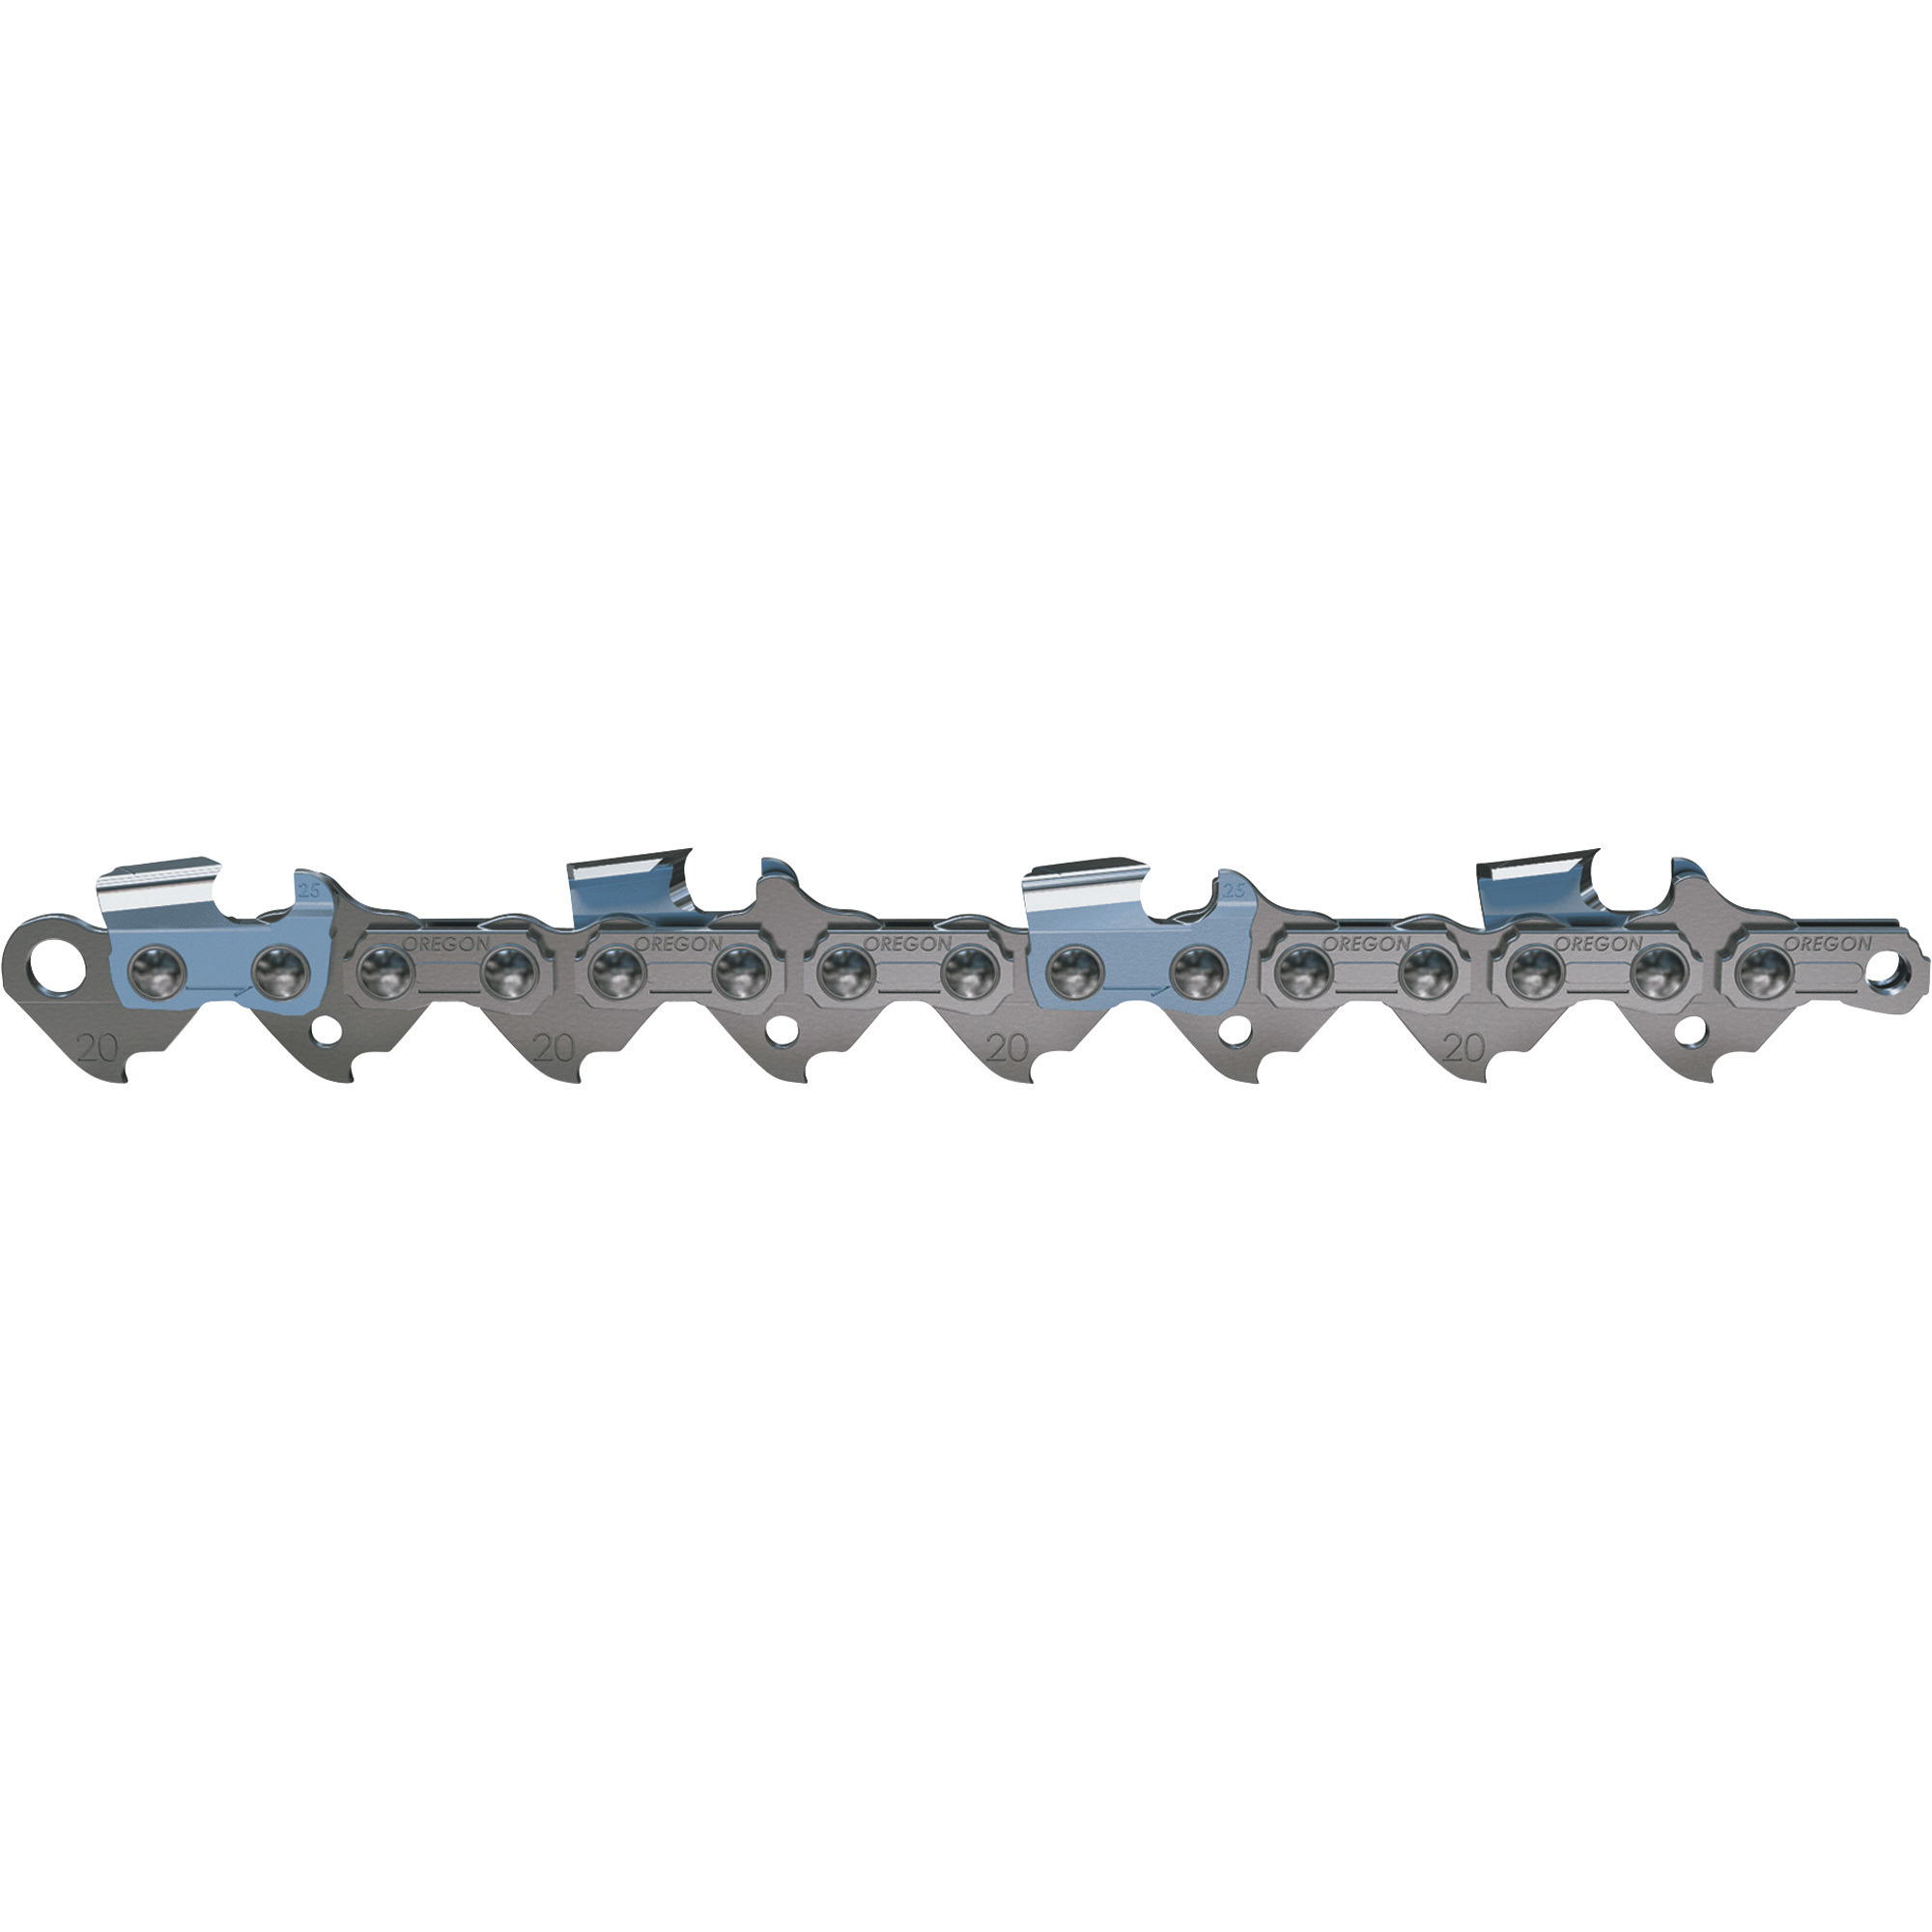 Low Kickback Chainsaw Chain — 0.325Inch x 0.050Inch, Fits 16Inch Bar, Model /20BPX066G - Oregon H66